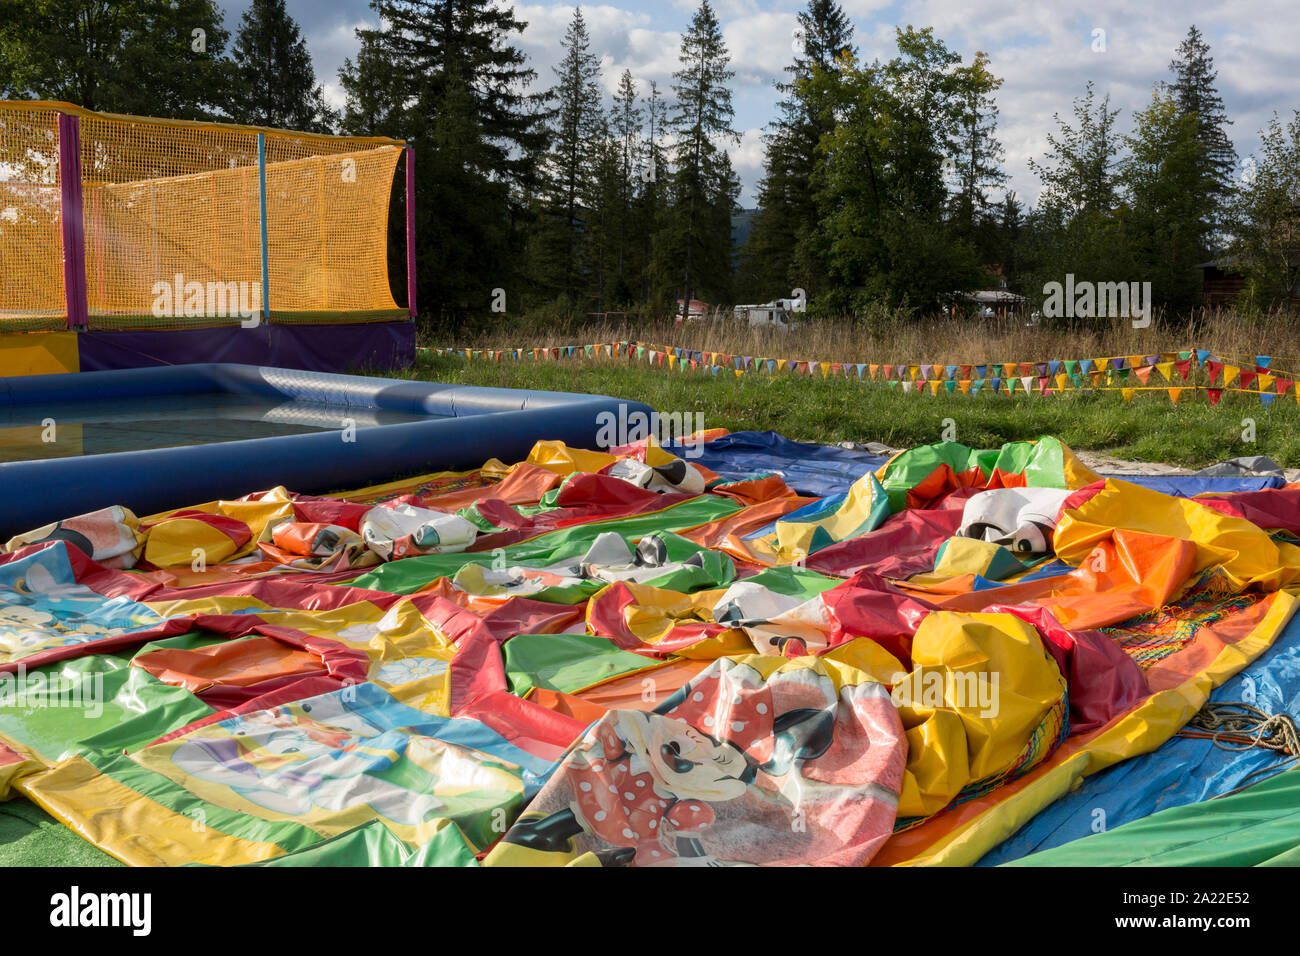 A landscape of a Polish version of Disneyland that features a deflated childrens' inflatable bouncy castle, on 18th September 2019, near the Wielka Krokiew ski jump, Zakopane, Malopolska, Poland. Stock Photo